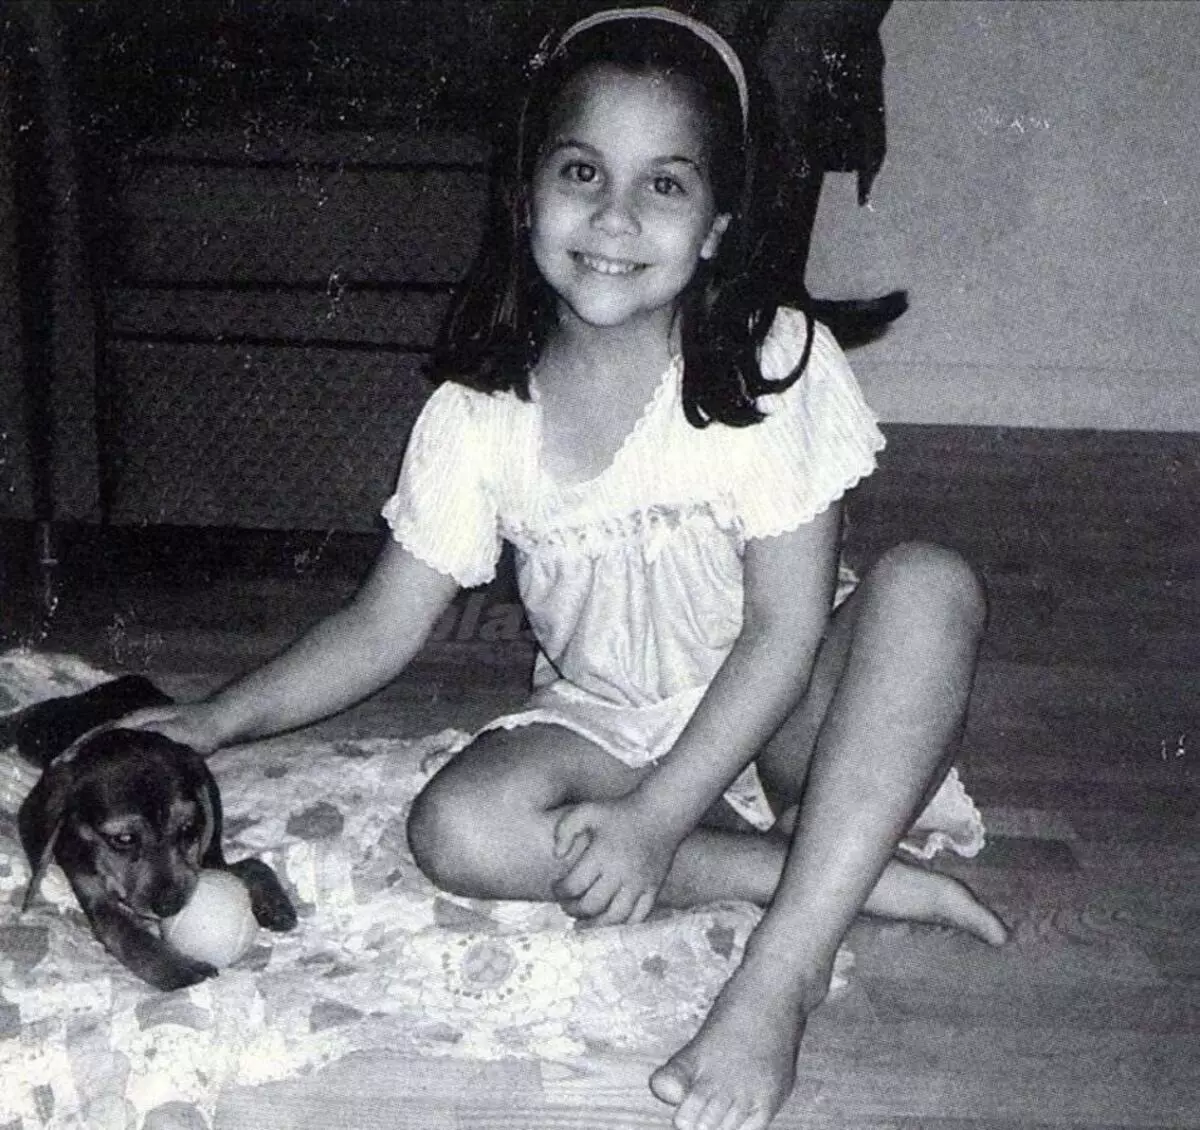 Запрещенка с детьми. Леди Гага в детстве. Сте́фани Джоа́нн Анджели́на Джермано́тта. Леди Гага в детстве фото. Стефани Джерманотта в детстве.